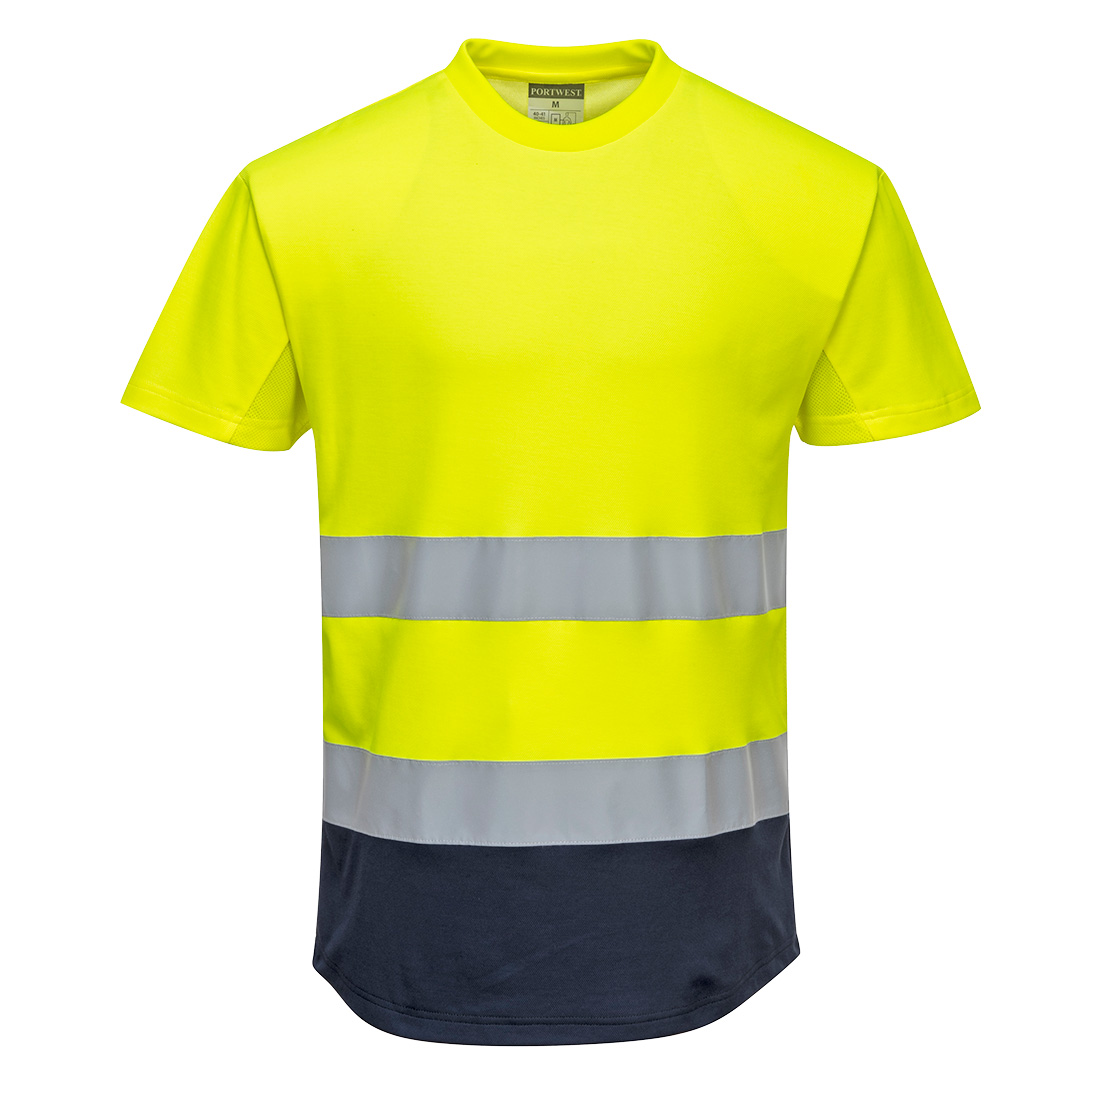 Two-Tone Mesh T-Shirt - Yellow/Navy